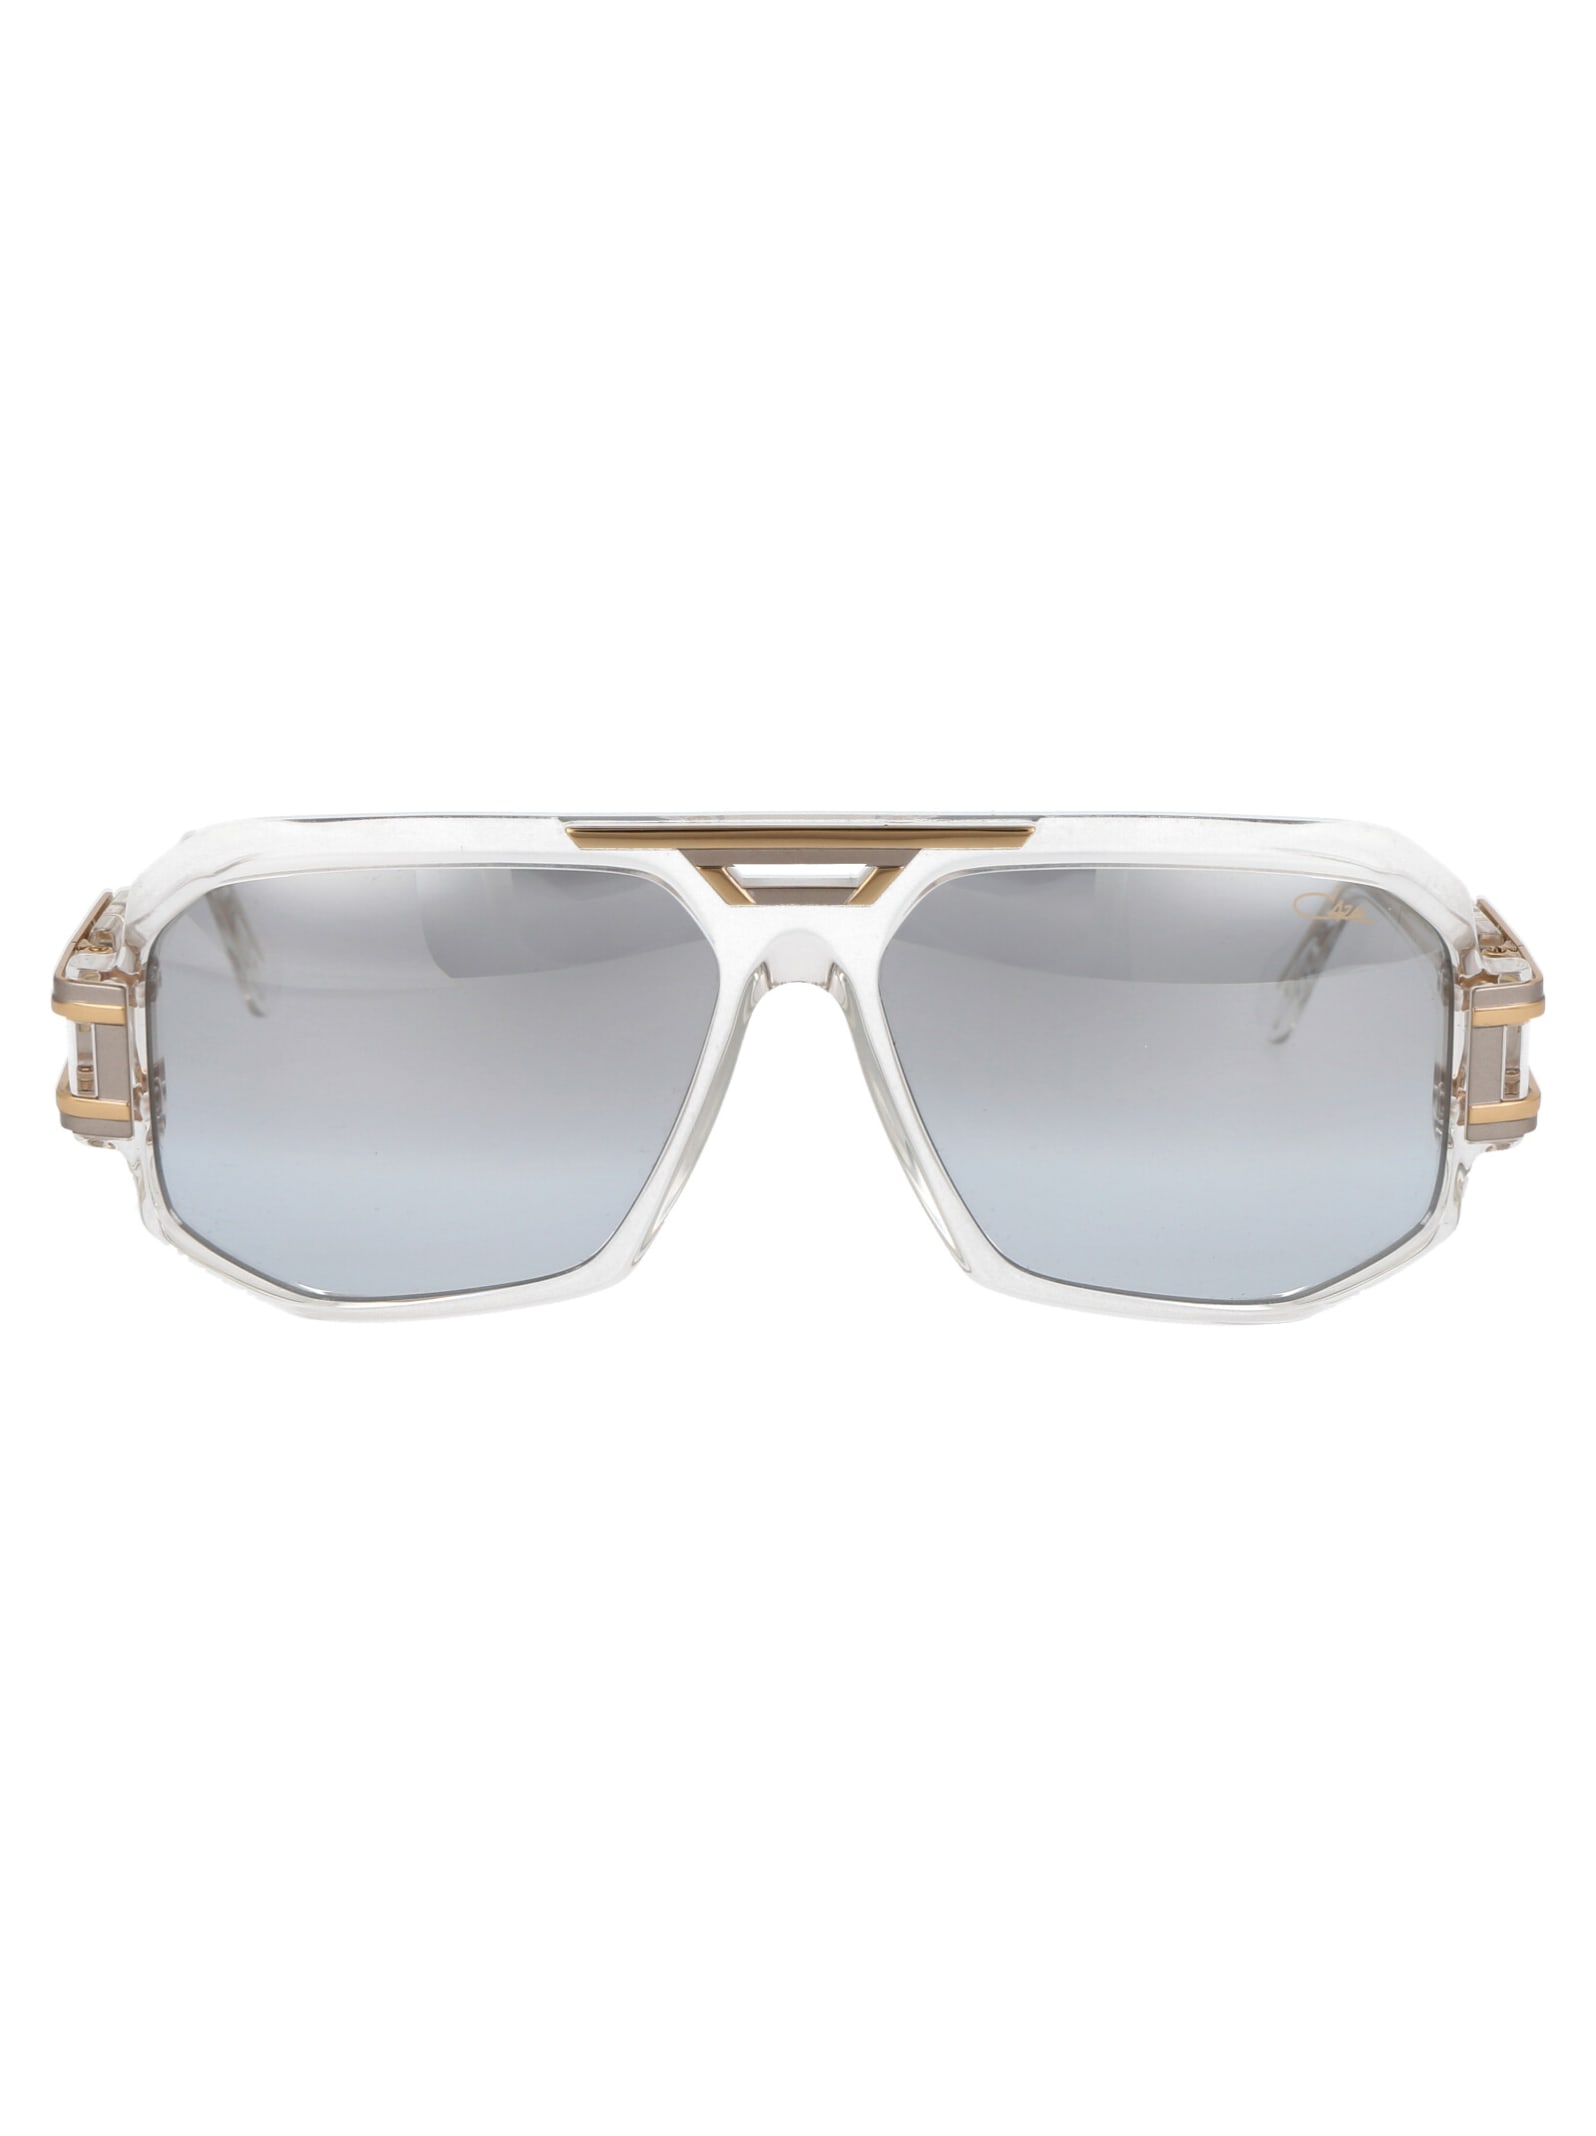 Cazal Mod. 675 Sunglasses